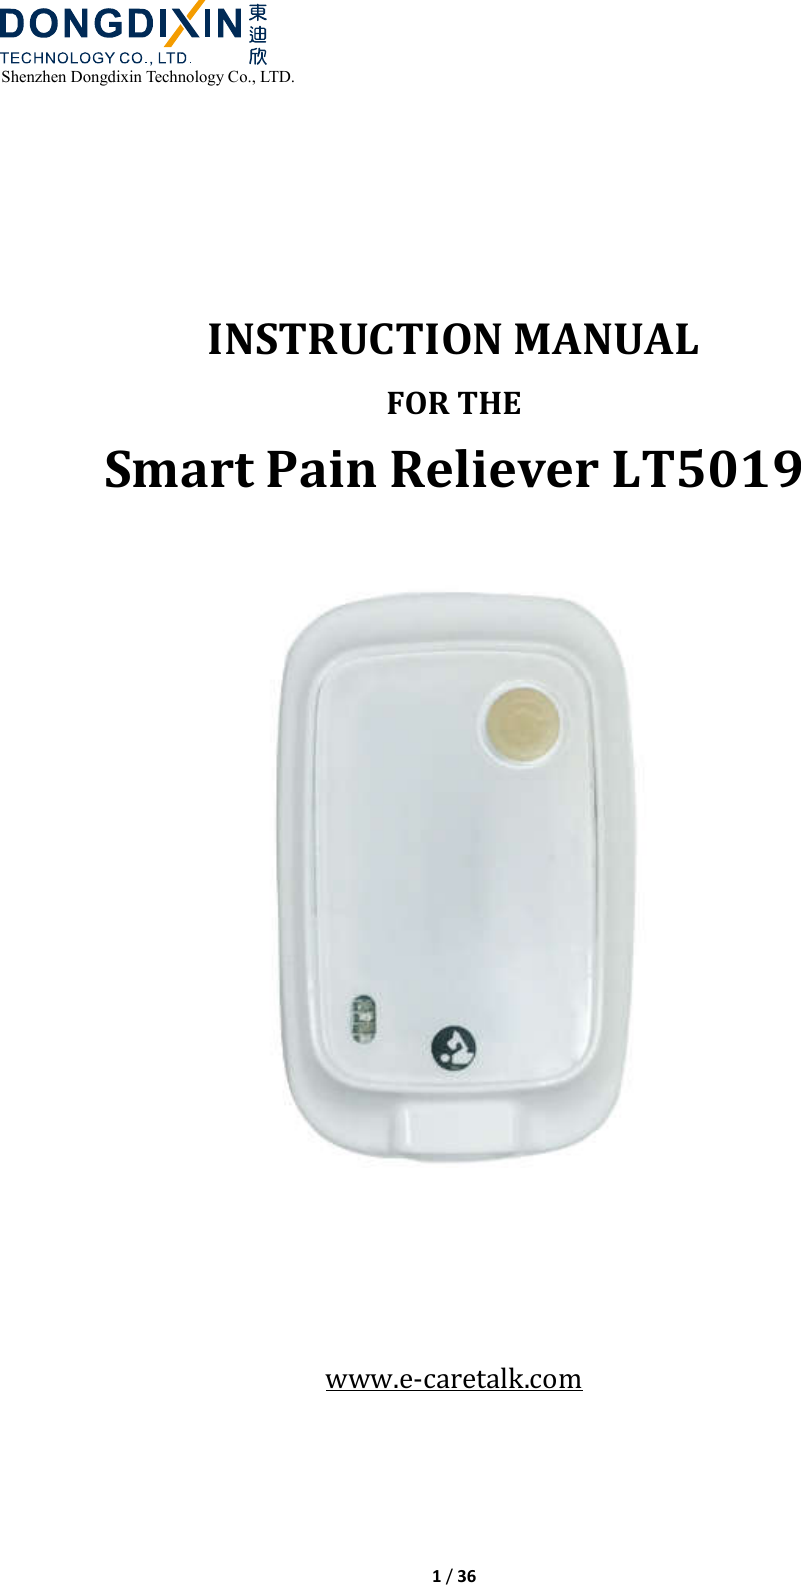  Shenzhen Dongdixin Technology Co., LTD.  1 / 36        INSTRUCTION MANUAL FOR THE Smart Pain Reliever LT5019       www.e‐caretalk.com     